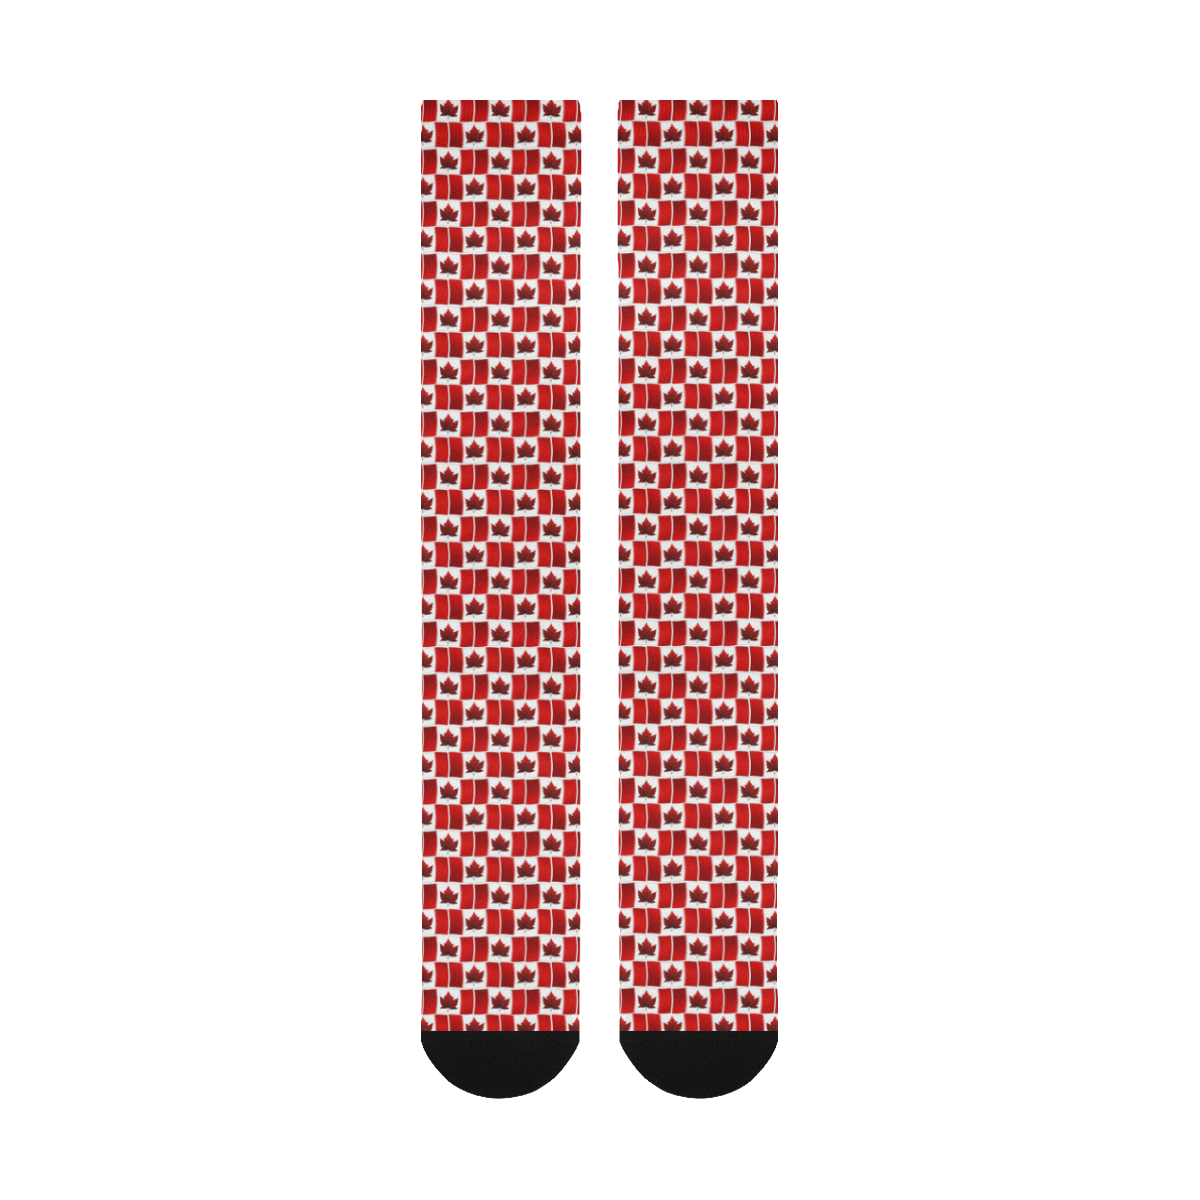 Canada Flag Knee High Socks Over-The-Calf Socks